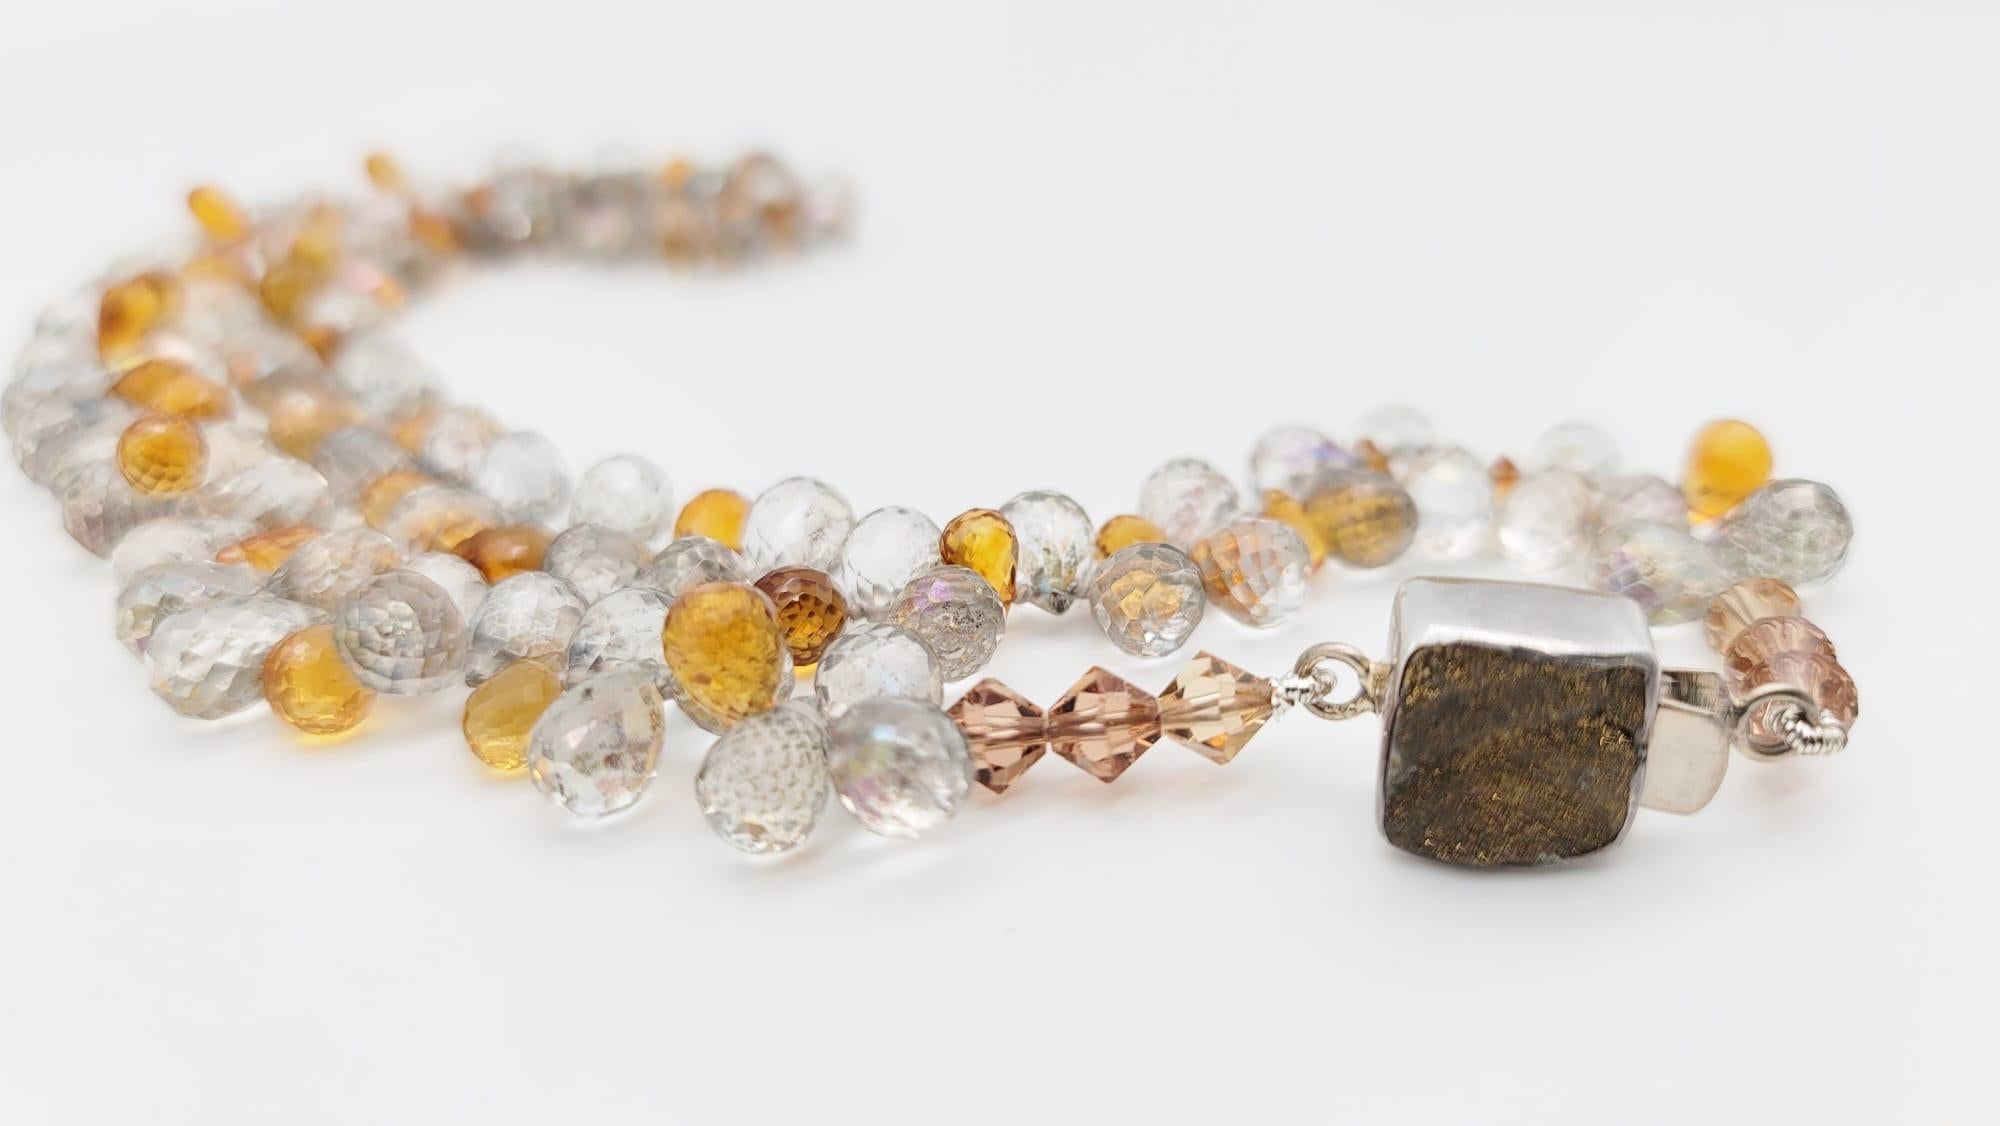 A.Jeschel  Stunning Topaz and Crystal Quartz teardrop necklace For Sale 3